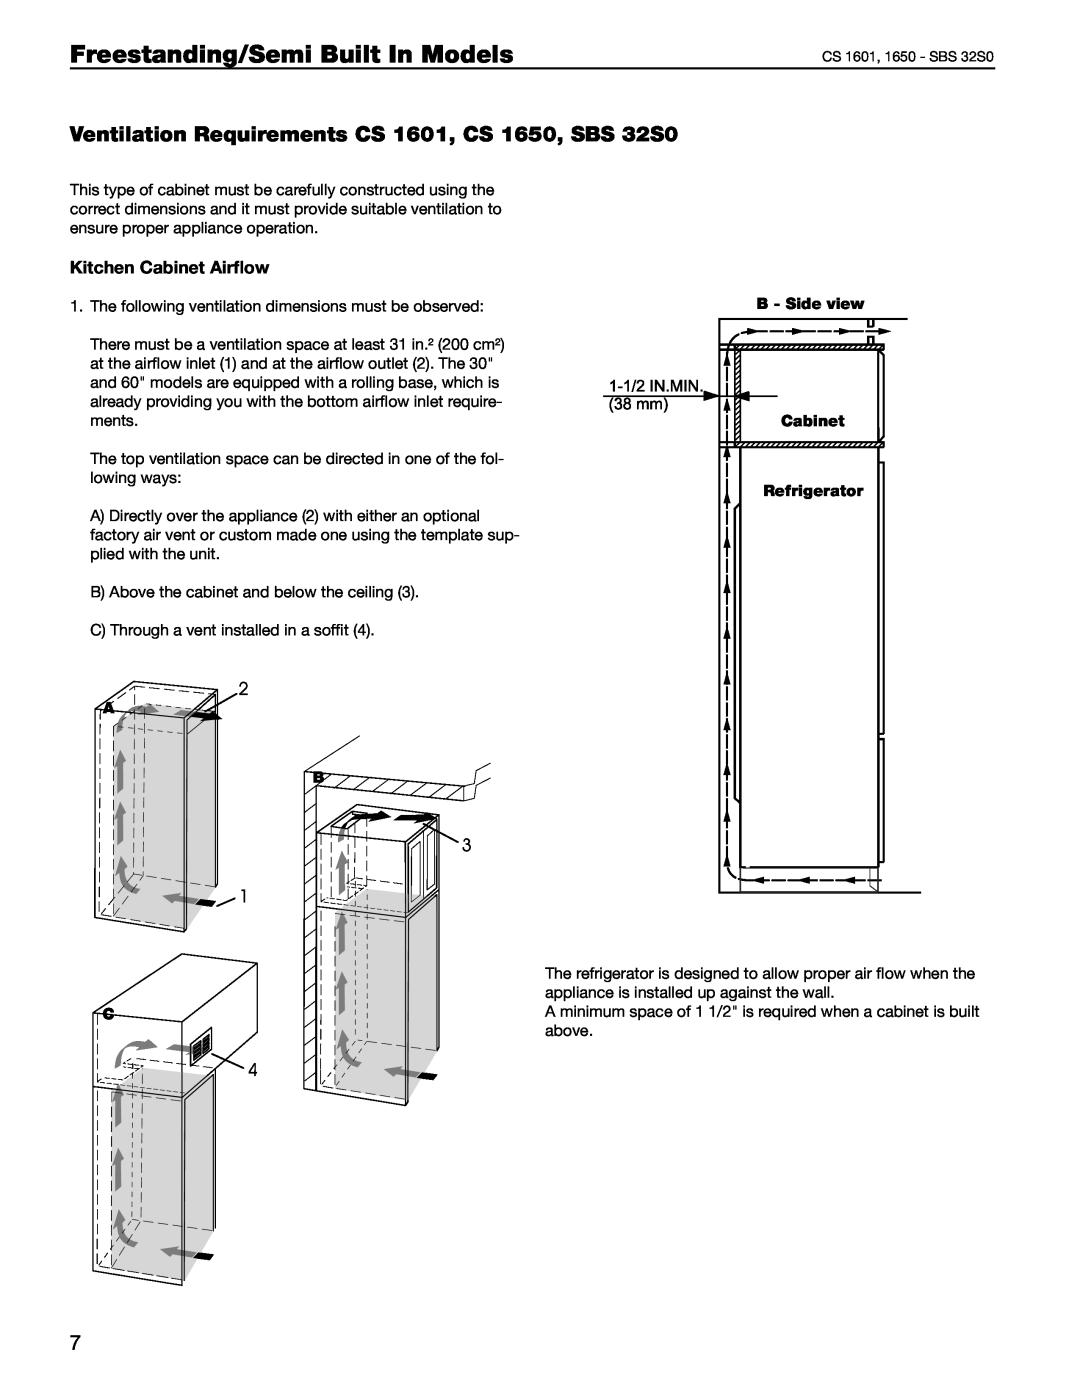 Liebherr 36 Ventilation Requirements CS 1601, CS 1650, SBS 32S0, Freestanding/Semi Built In Models, Kitchen Cabinet Airﬂow 